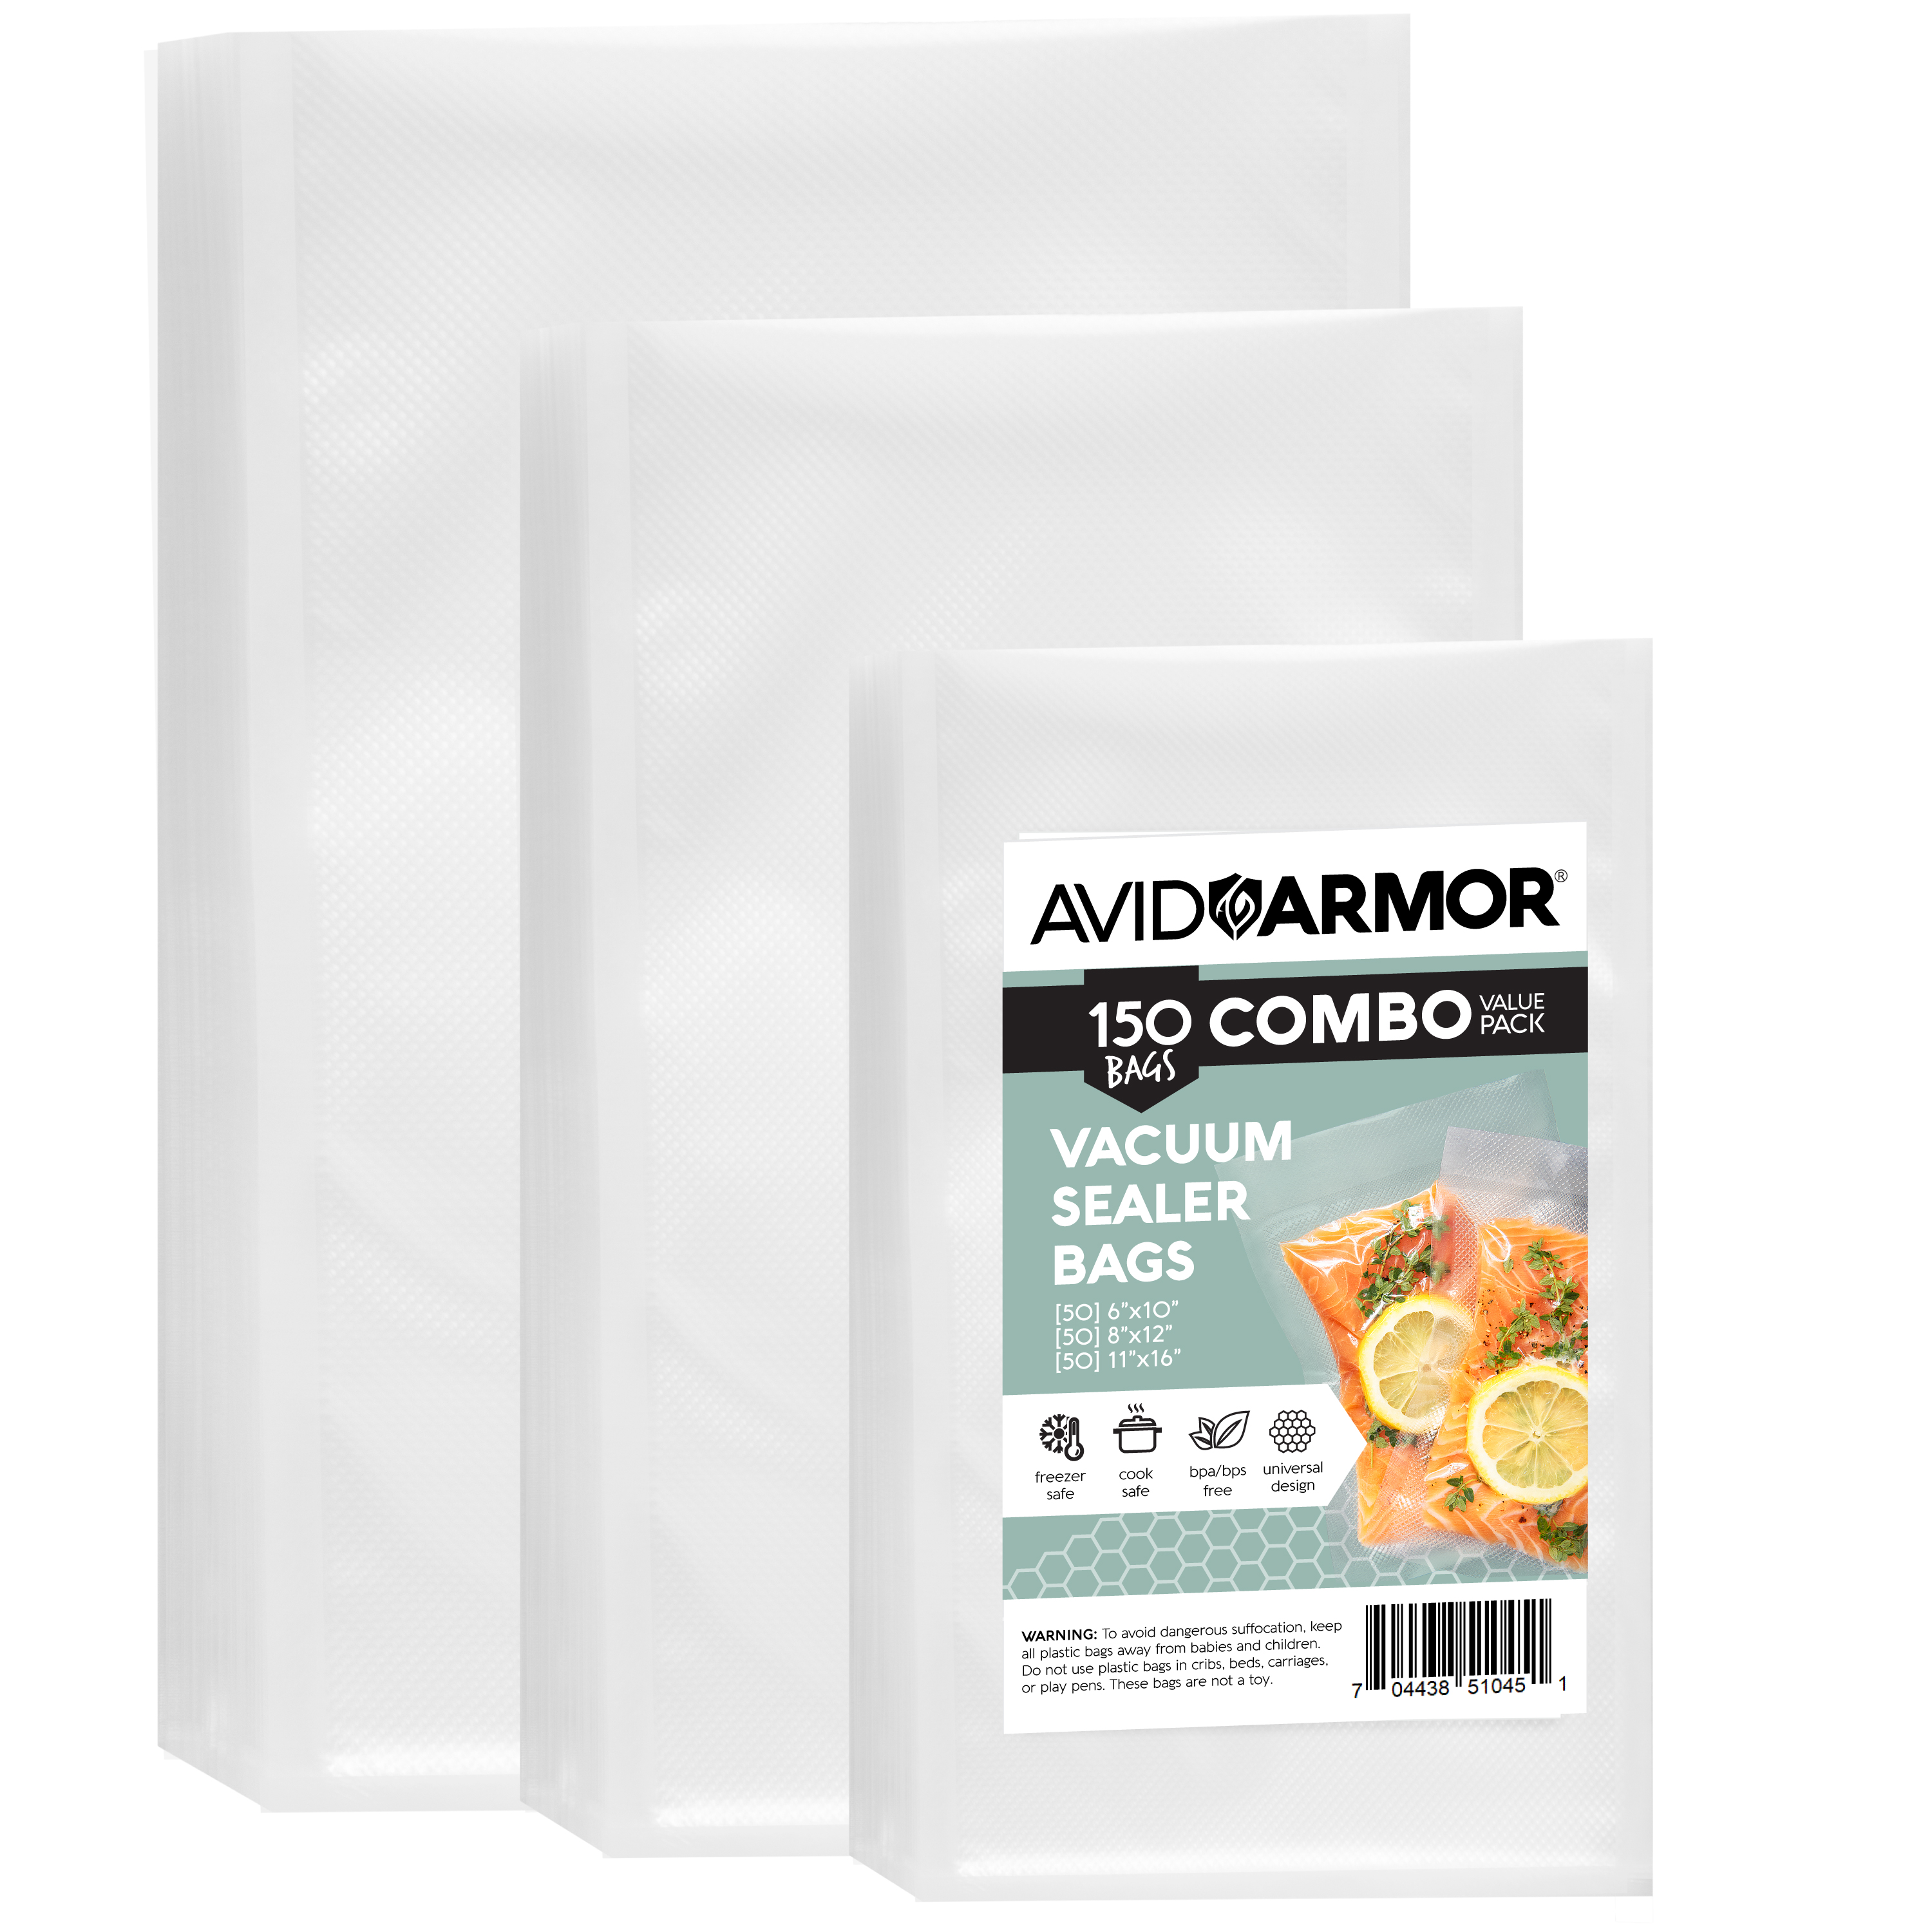 Foodsaver Liquid Block Heat-Seal Quart Bags - 12 Count